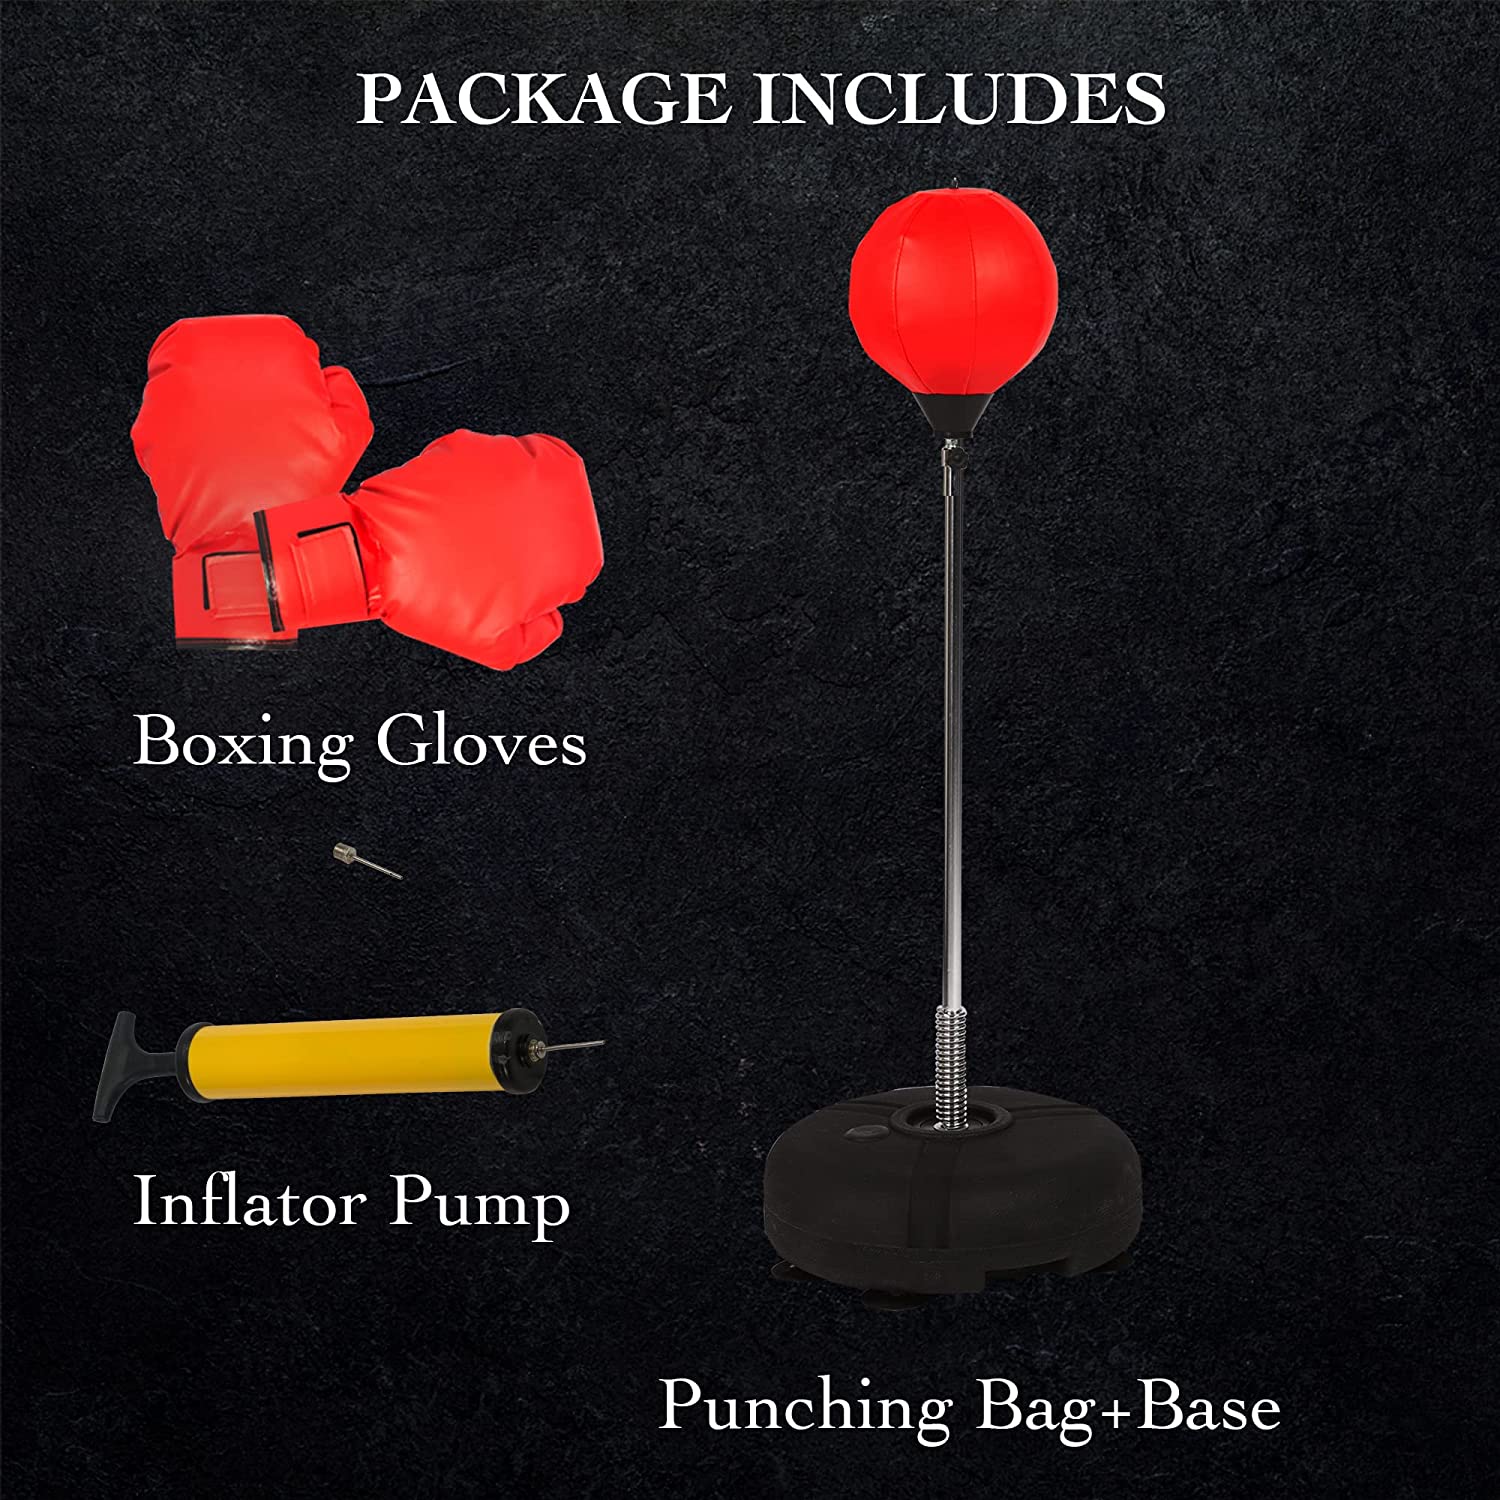 Freestanding Reflex Bag Height Adjustable Punching Bag Boxing Ball Set w/ Boxing Gloves